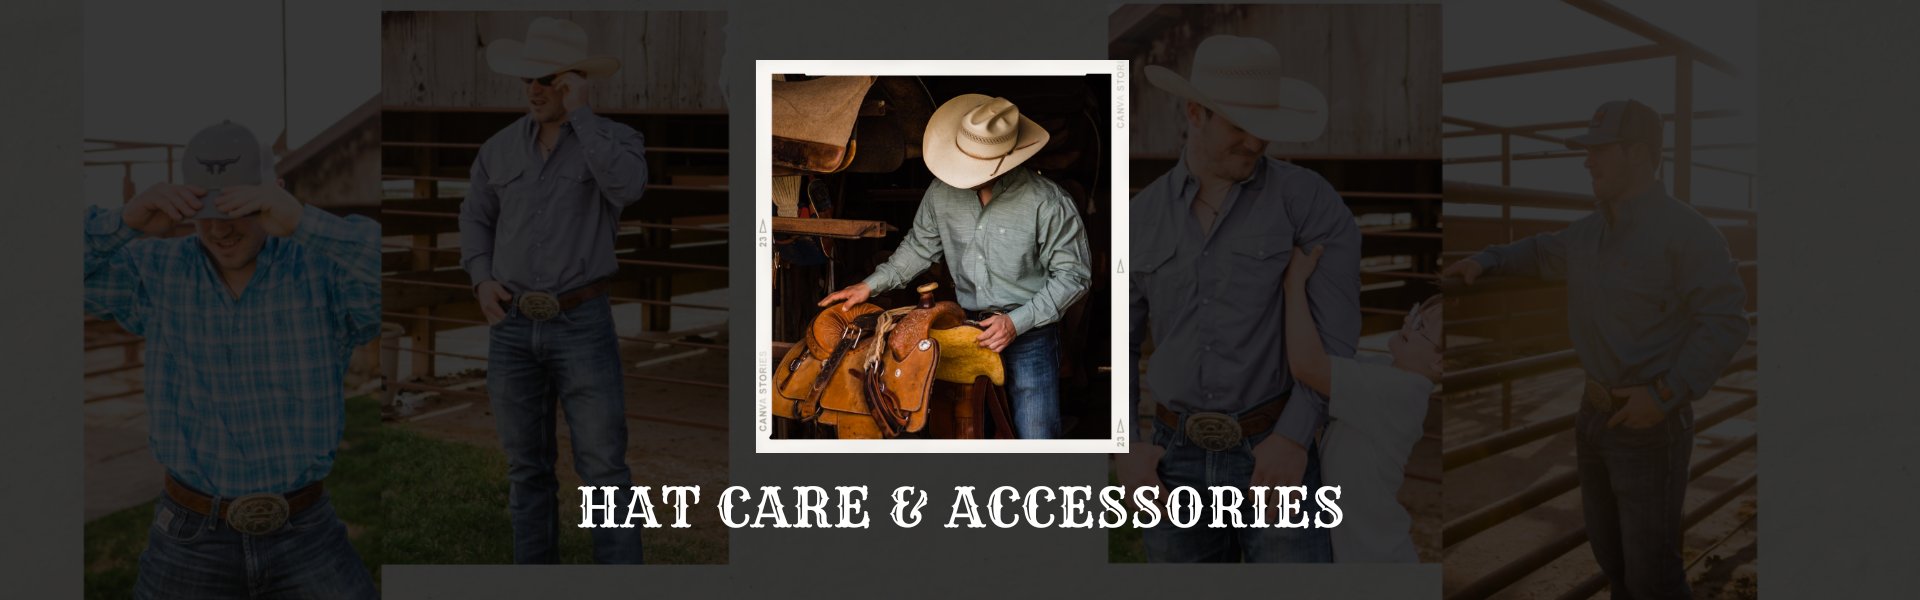 Hat Care & Accessories